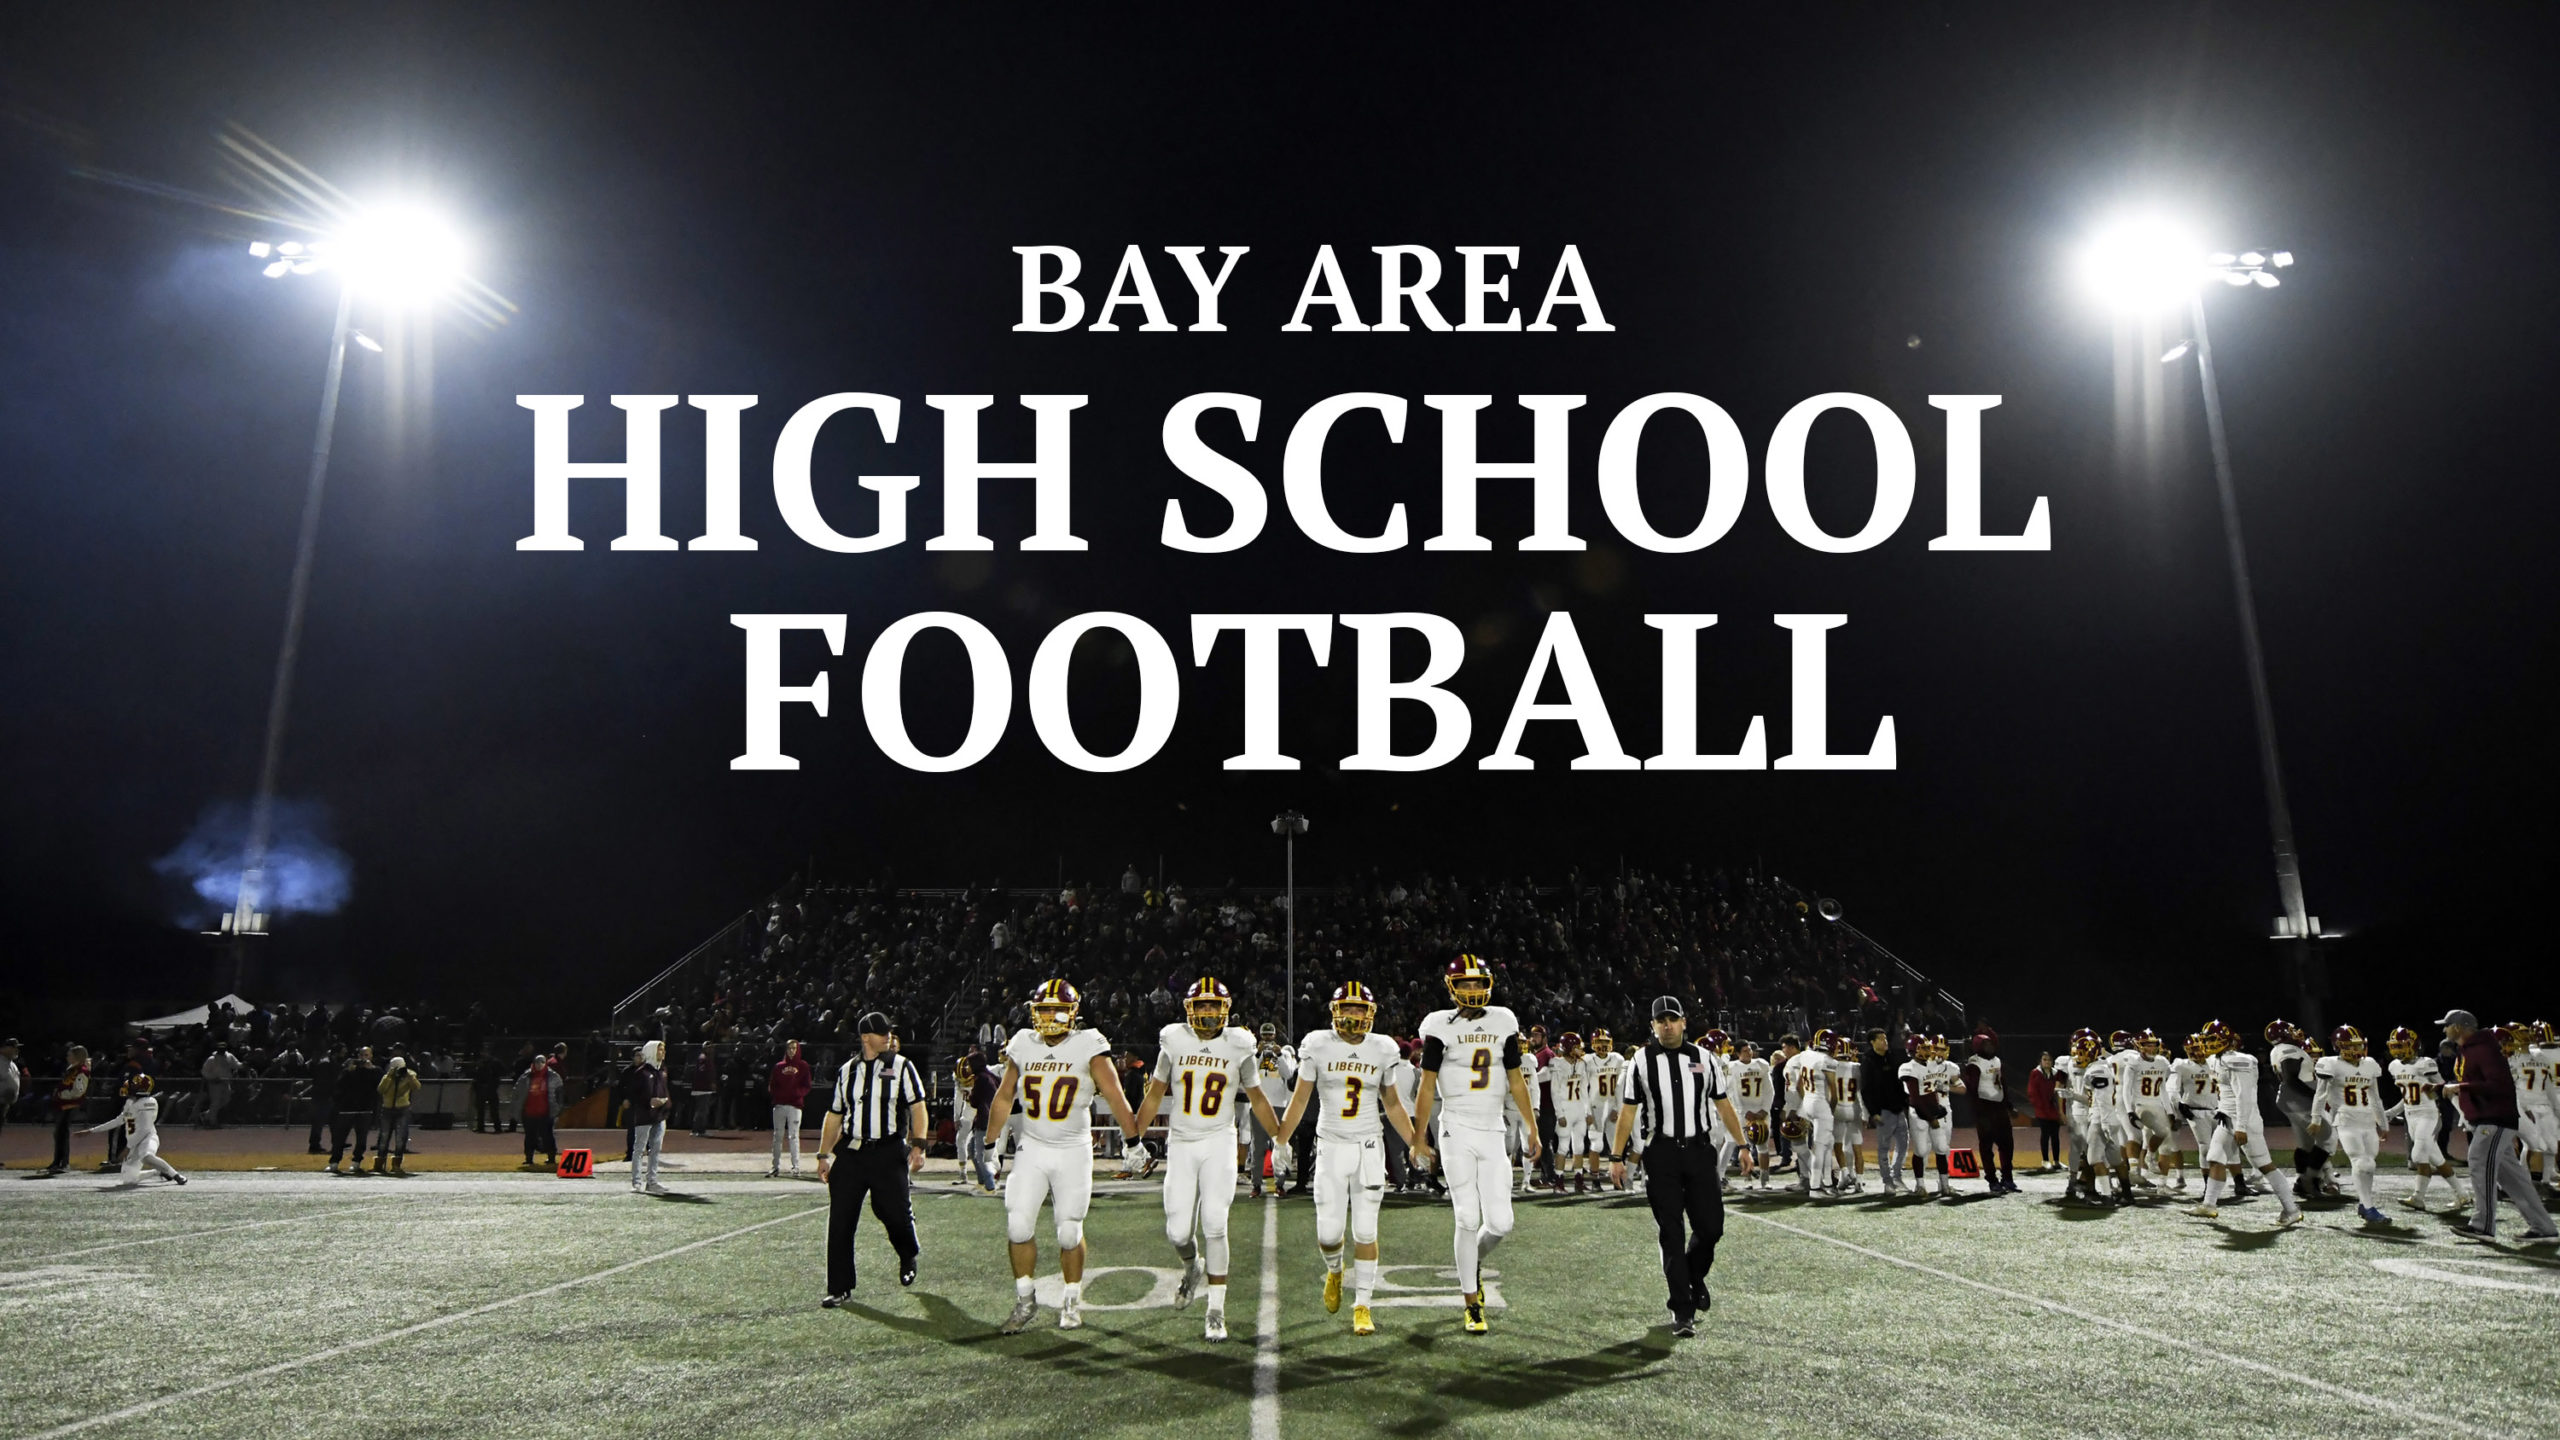 Football players on a field. Caption above them: Bay Area High School Football.